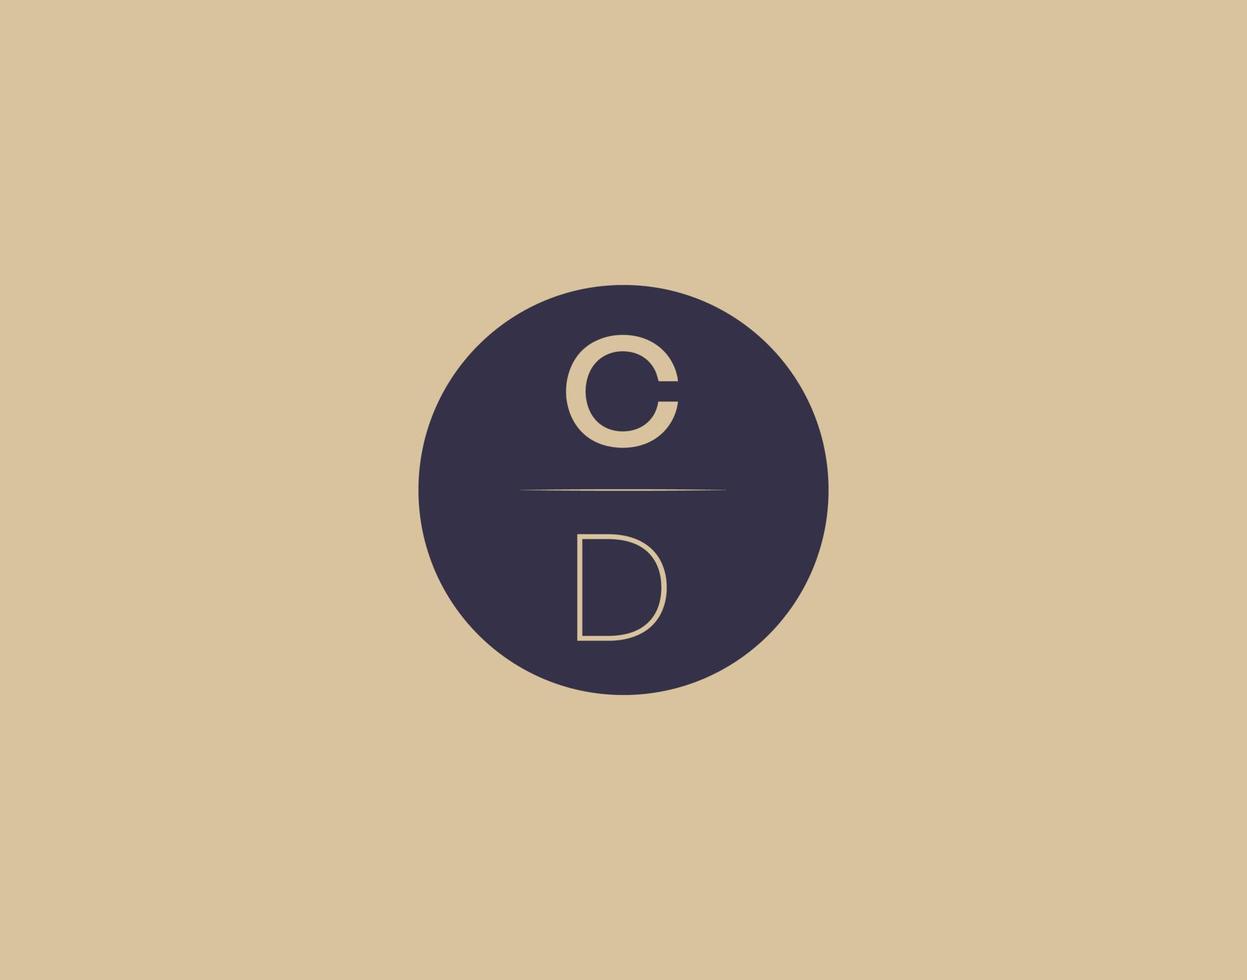 CD letter modern elegant logo design vector images